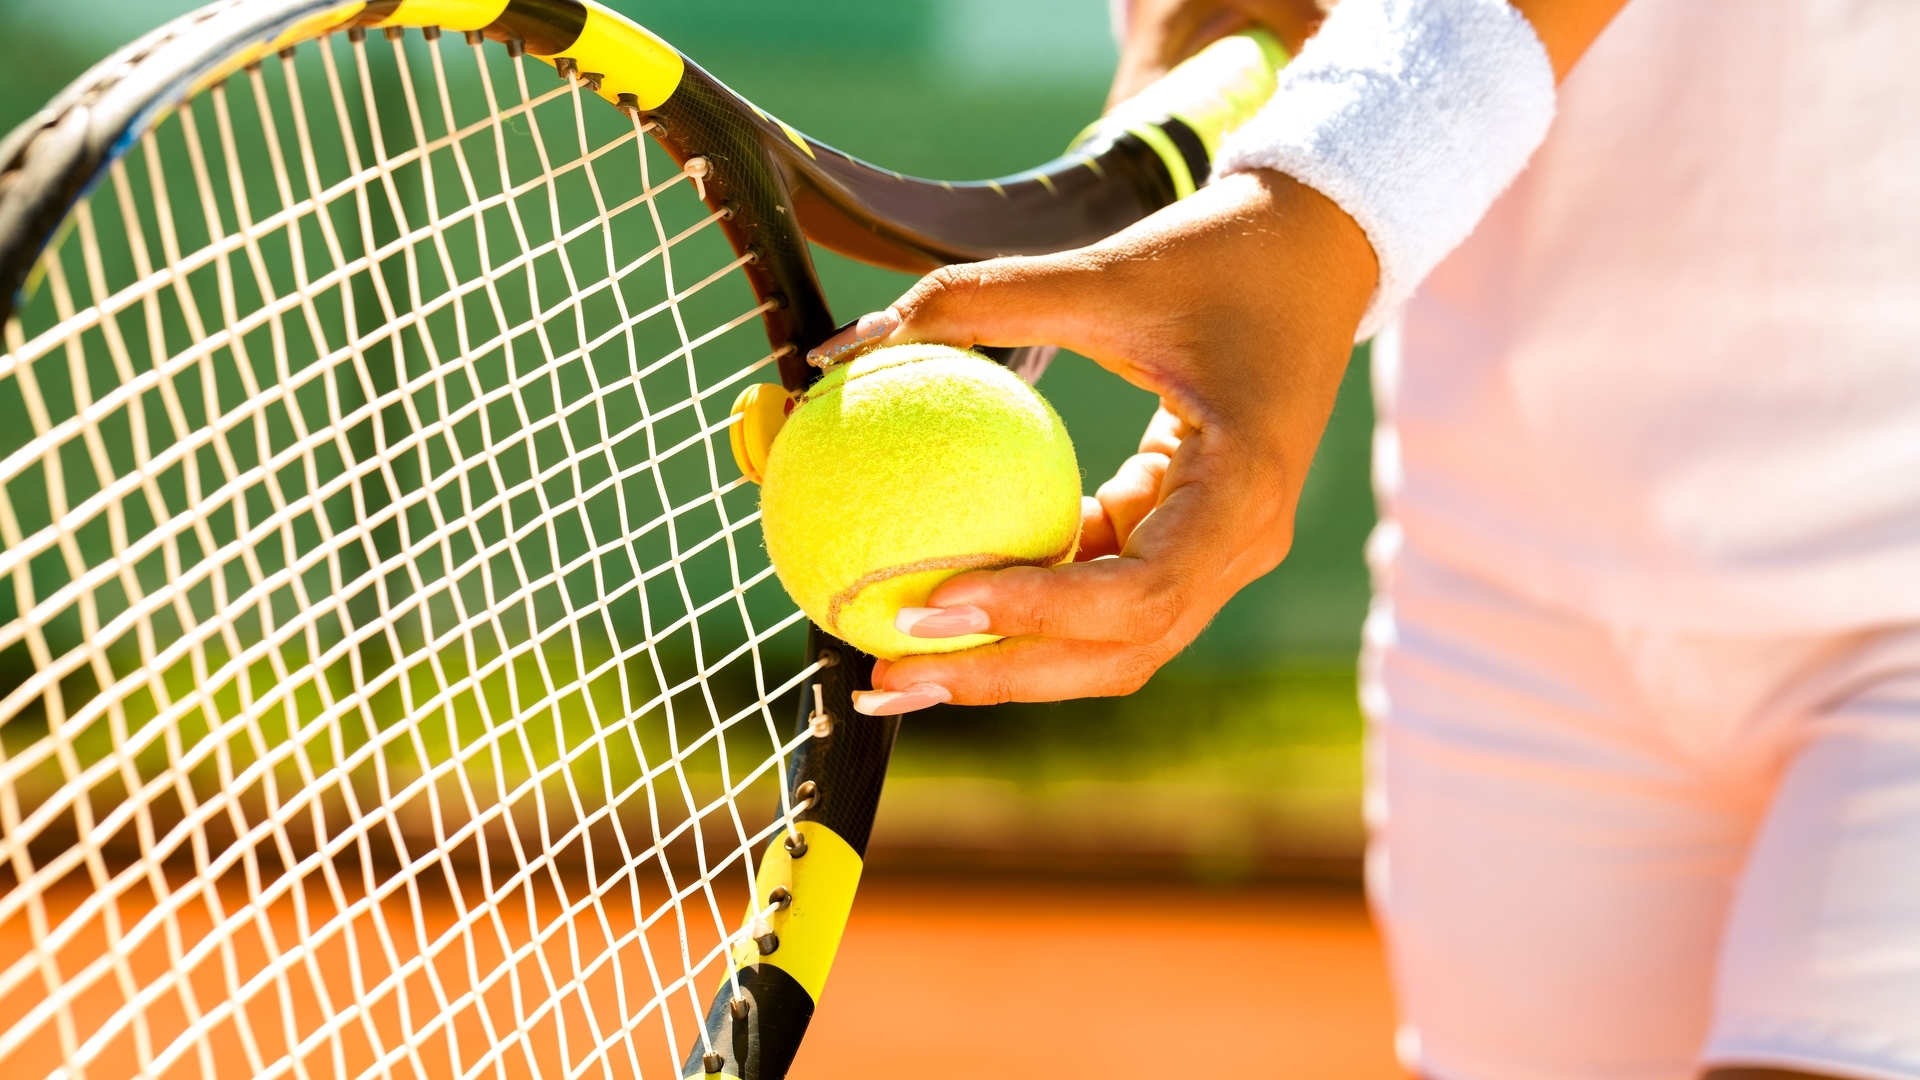 Image: Tennis, sports, racket, ball, serve